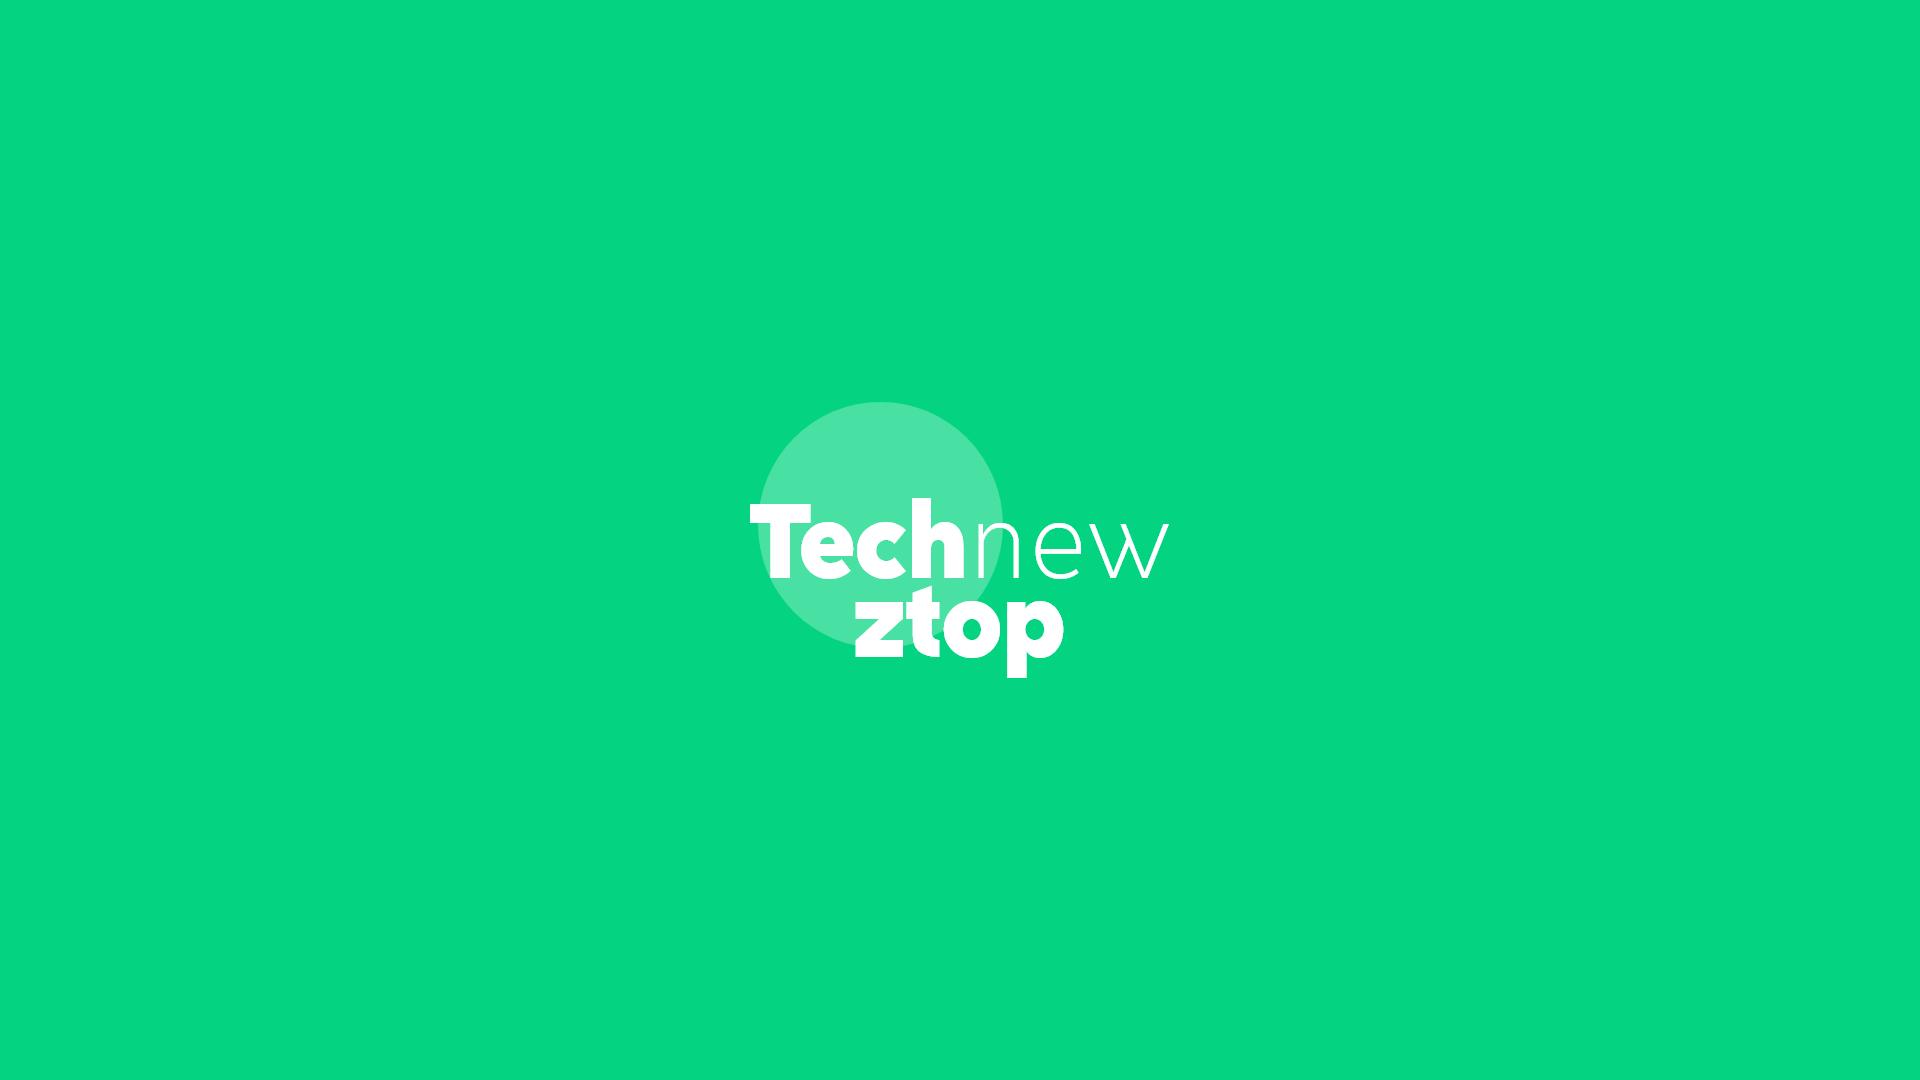 Technewztop App download APK